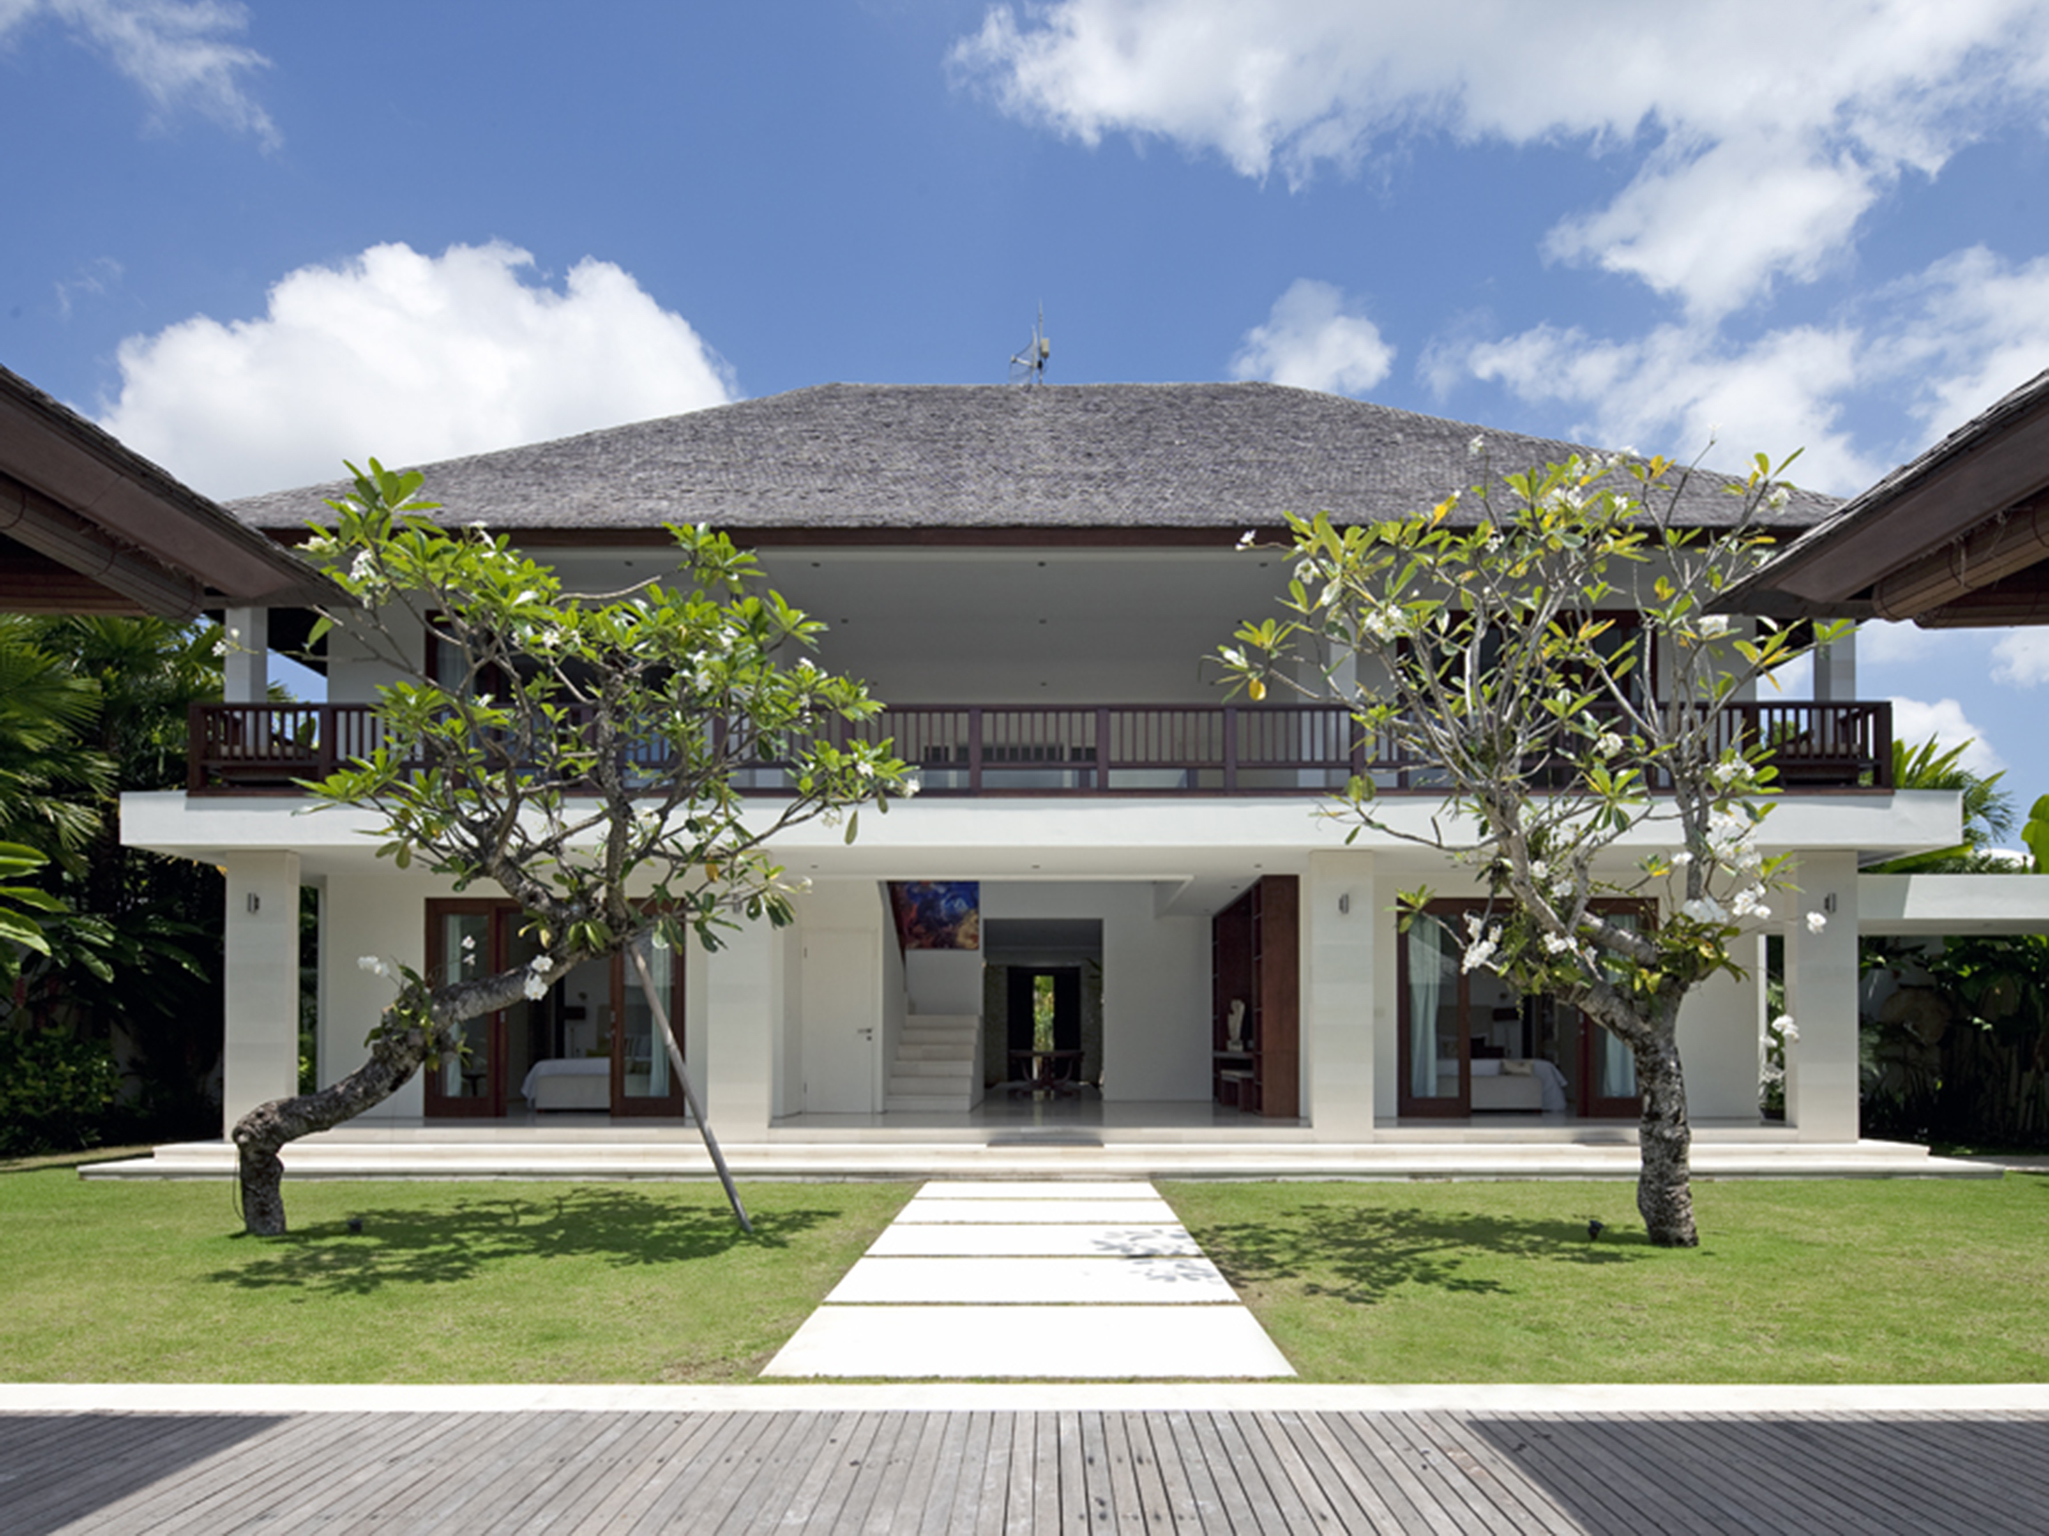 Villa Asante - The villa and lawn - Villa Asante, Canggu, Bali